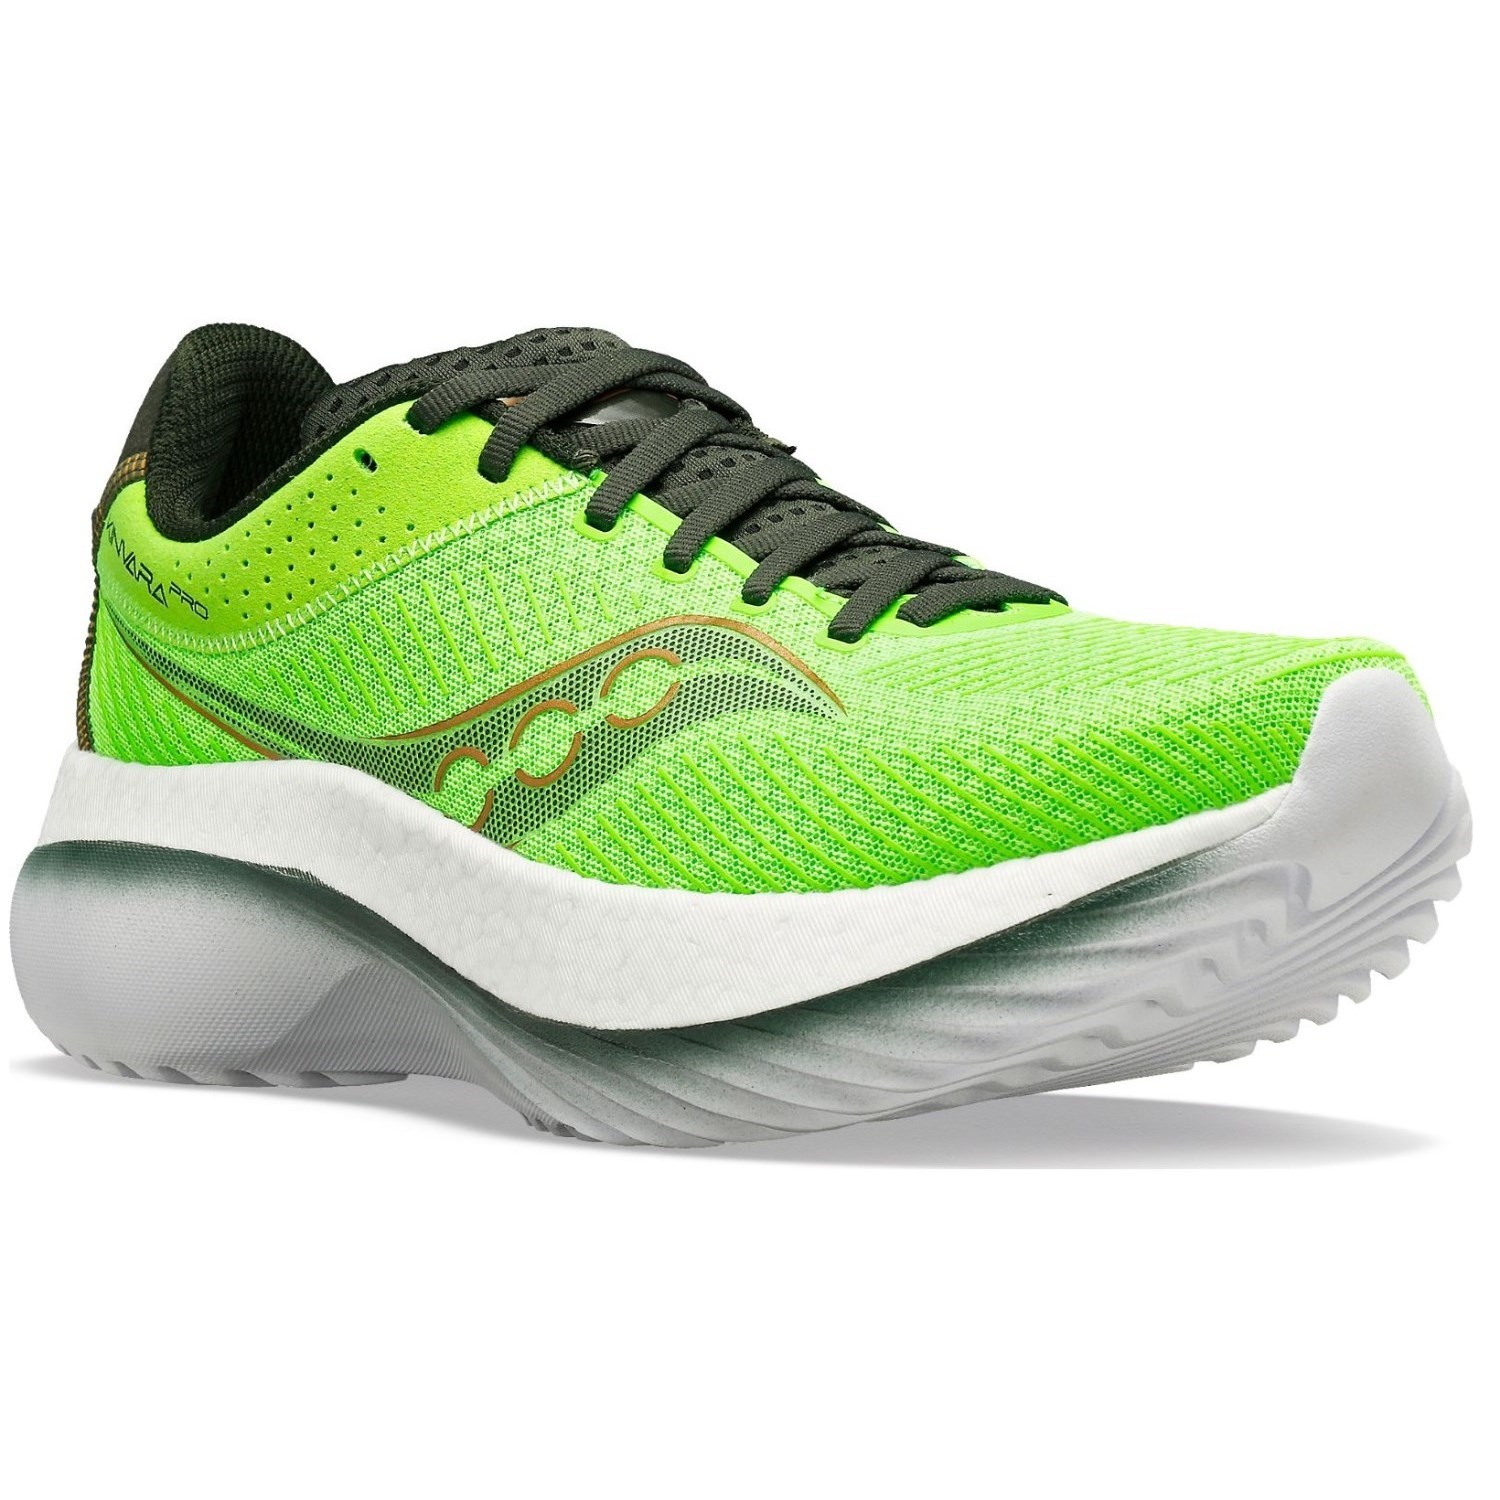 Saucony Kinvara Pro - Mens Running Shoes - Slime/Umbra | Sportitude Running